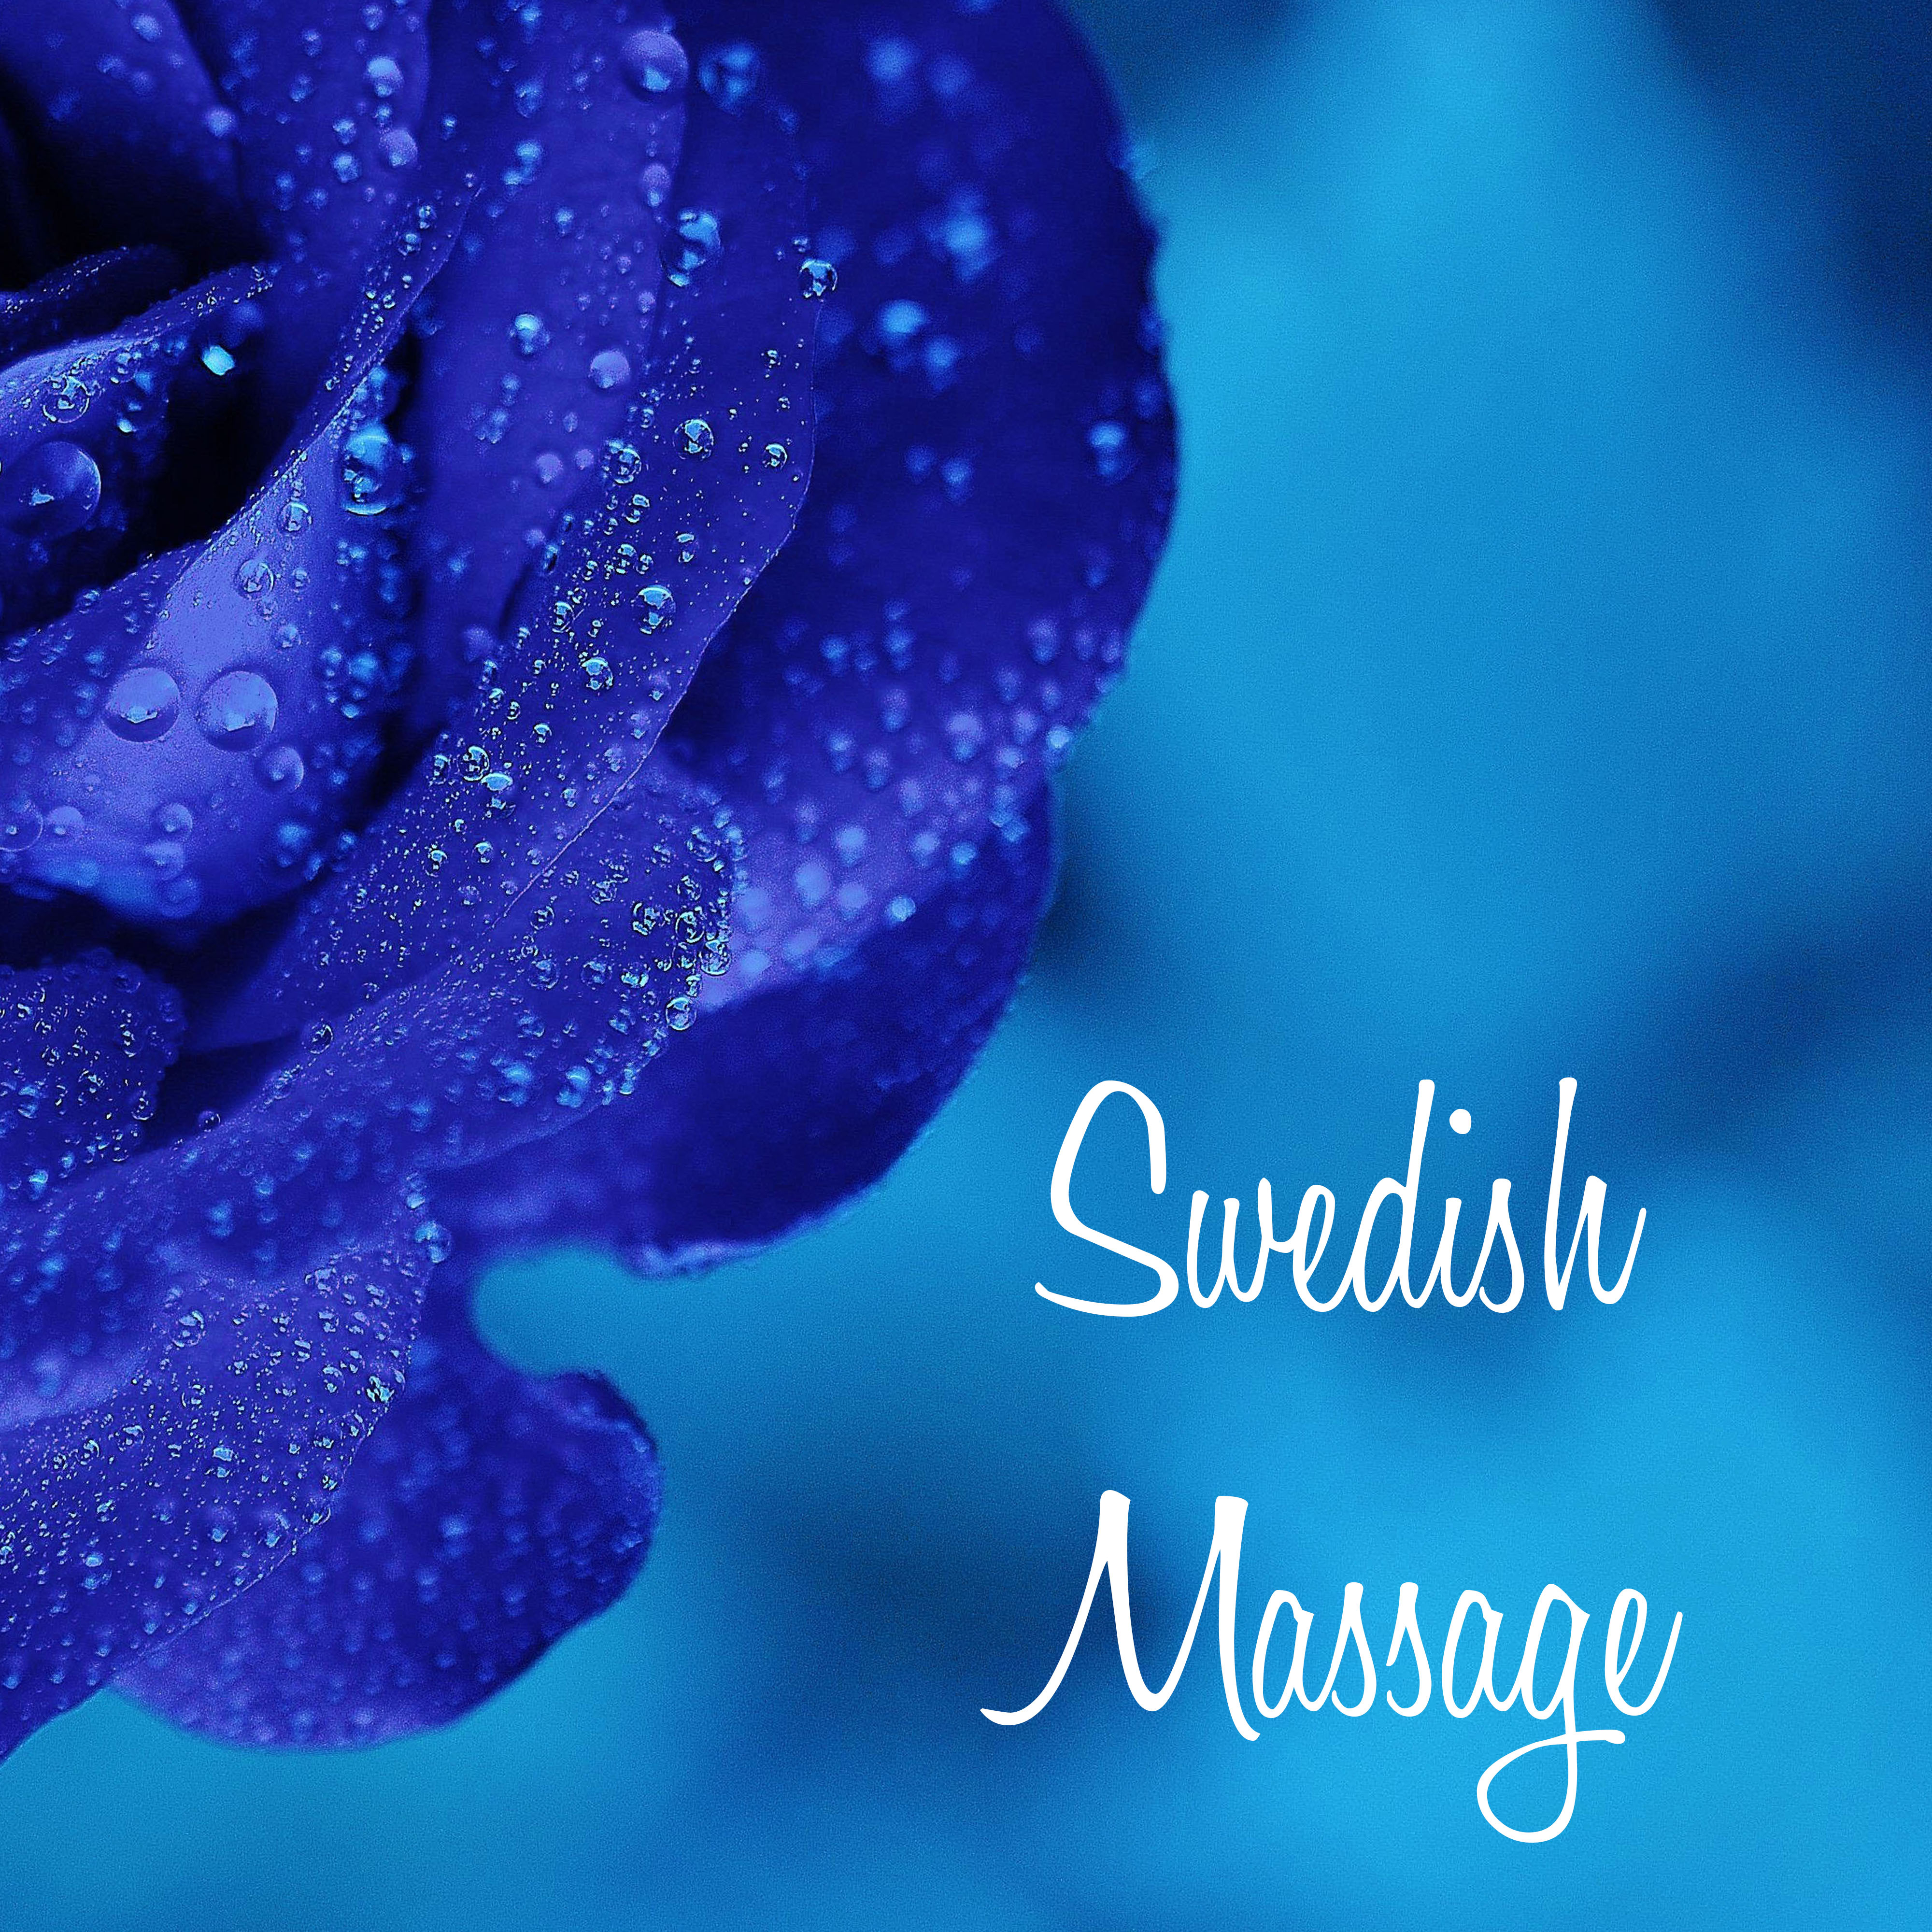 Swedish Massage - Sweet Spa Sounds for Reiki & Massotherapy